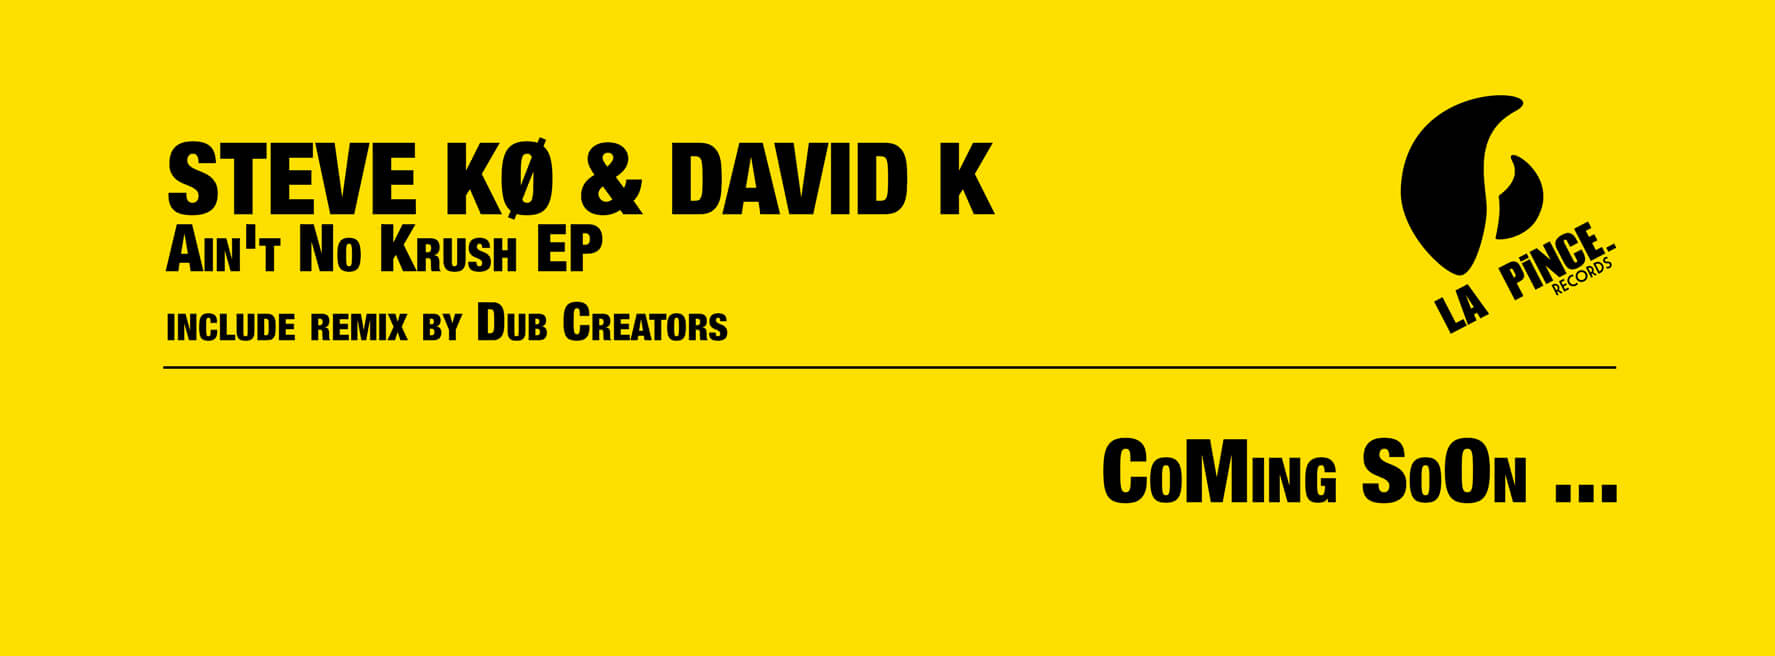 STEVE KØ & DAVID K – Ain’t No Krush – Coming Soon